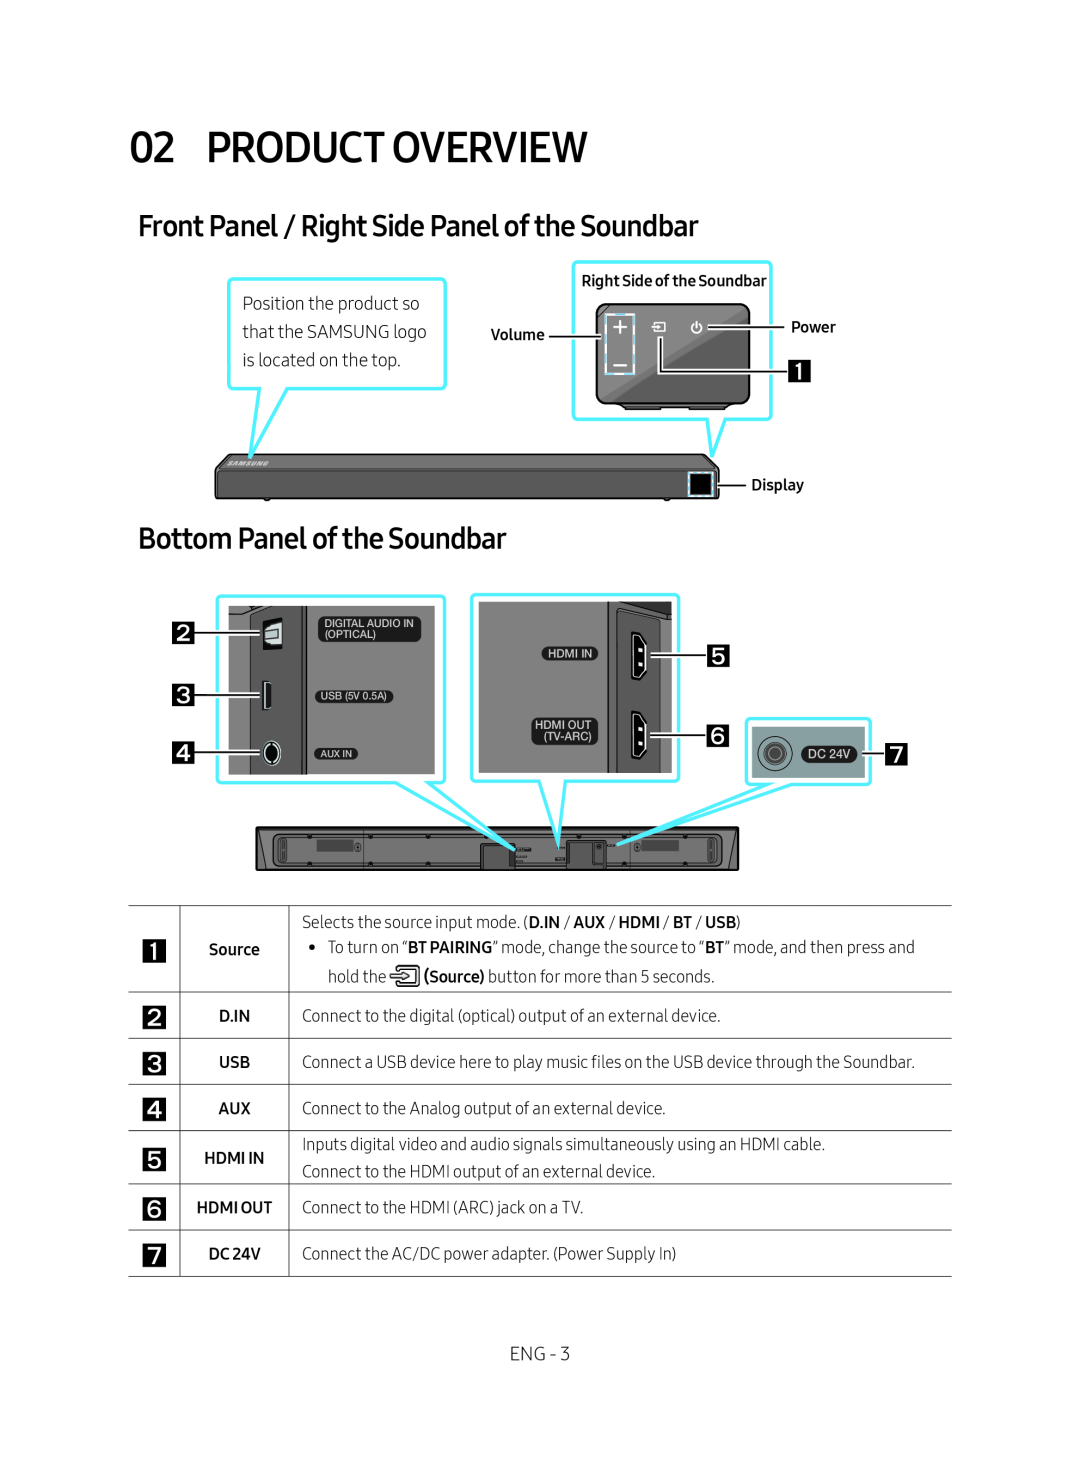 Front Panel / Right Side Panel of the Soundbar Standard HW-R60C